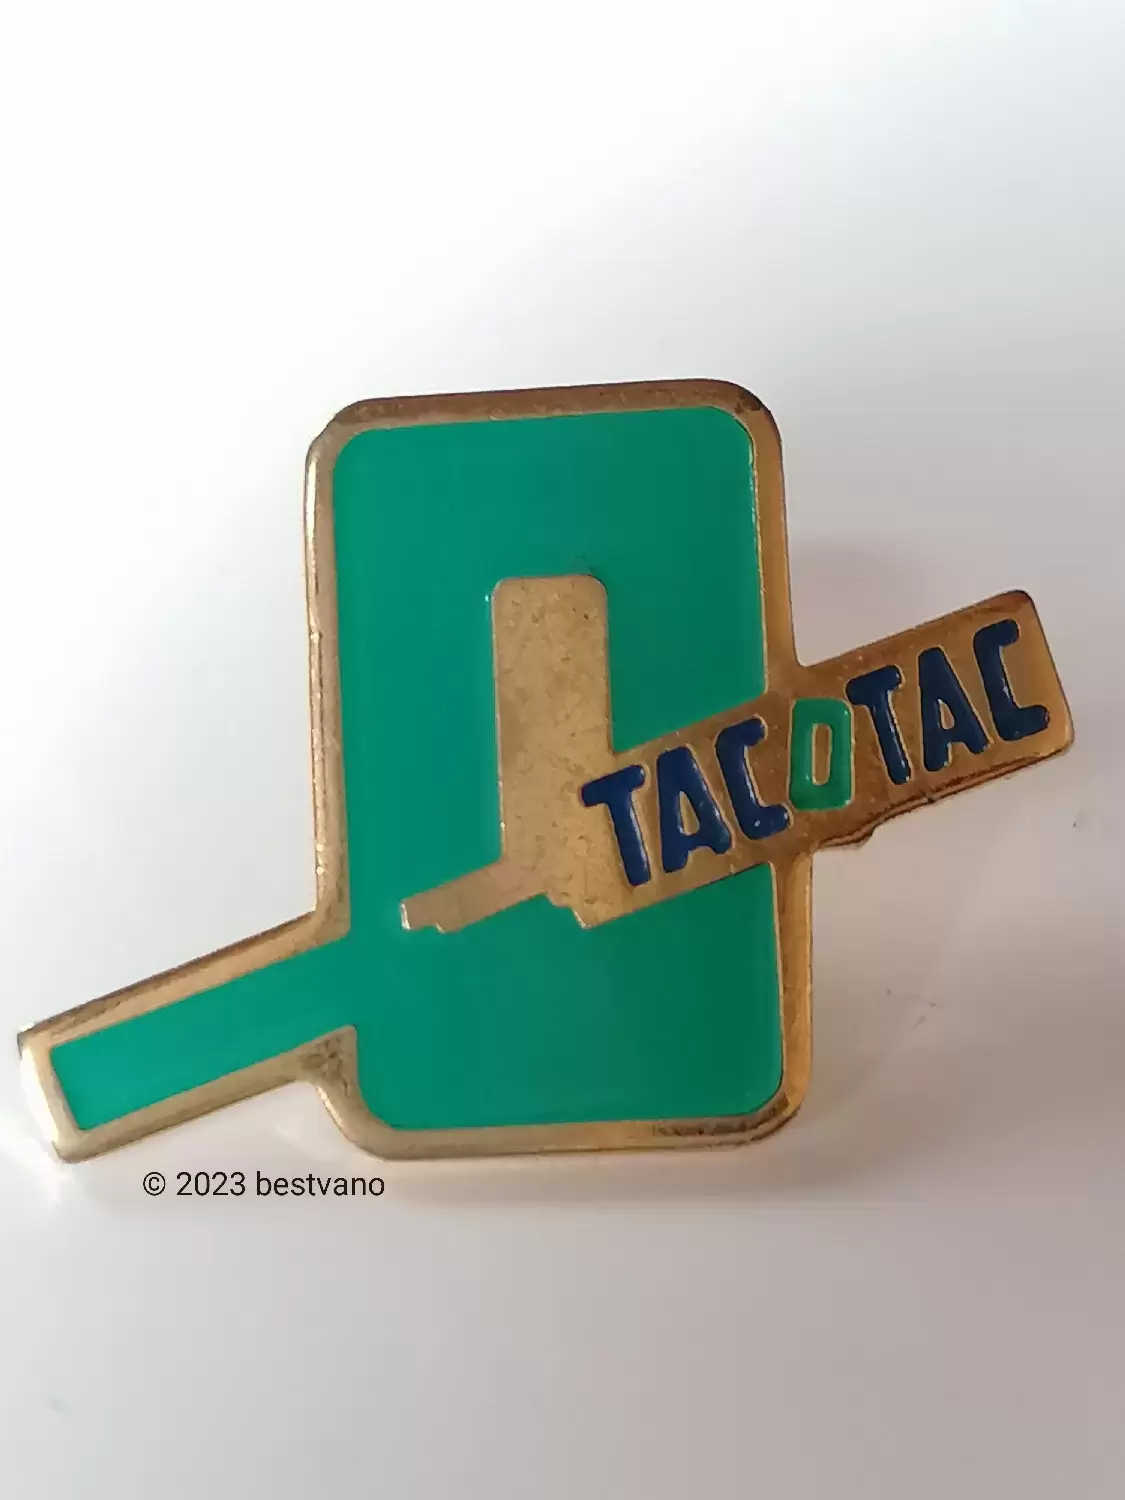 pin tac o tac - tacotac - taco tac - Acheter Pin's anciens et de collection  sur todocoleccion